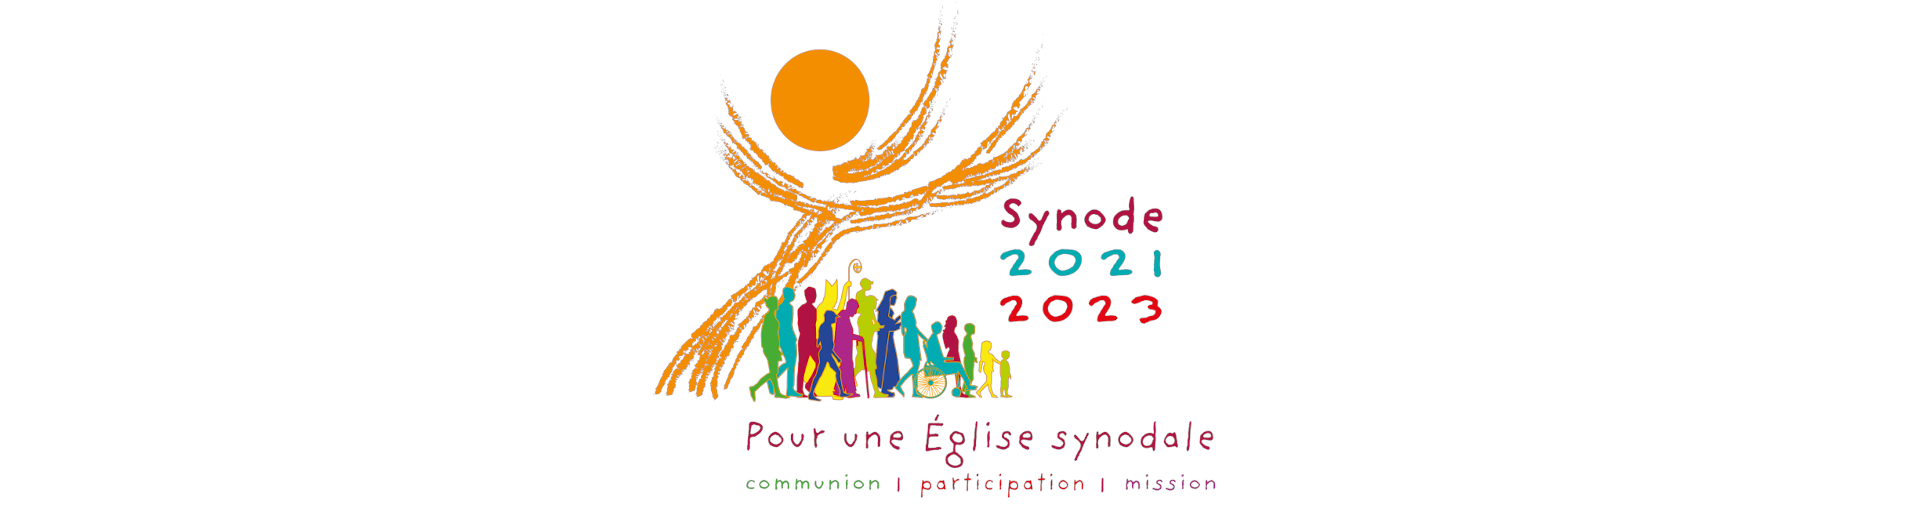 Synode 2021 2023 Communion Participation Mission